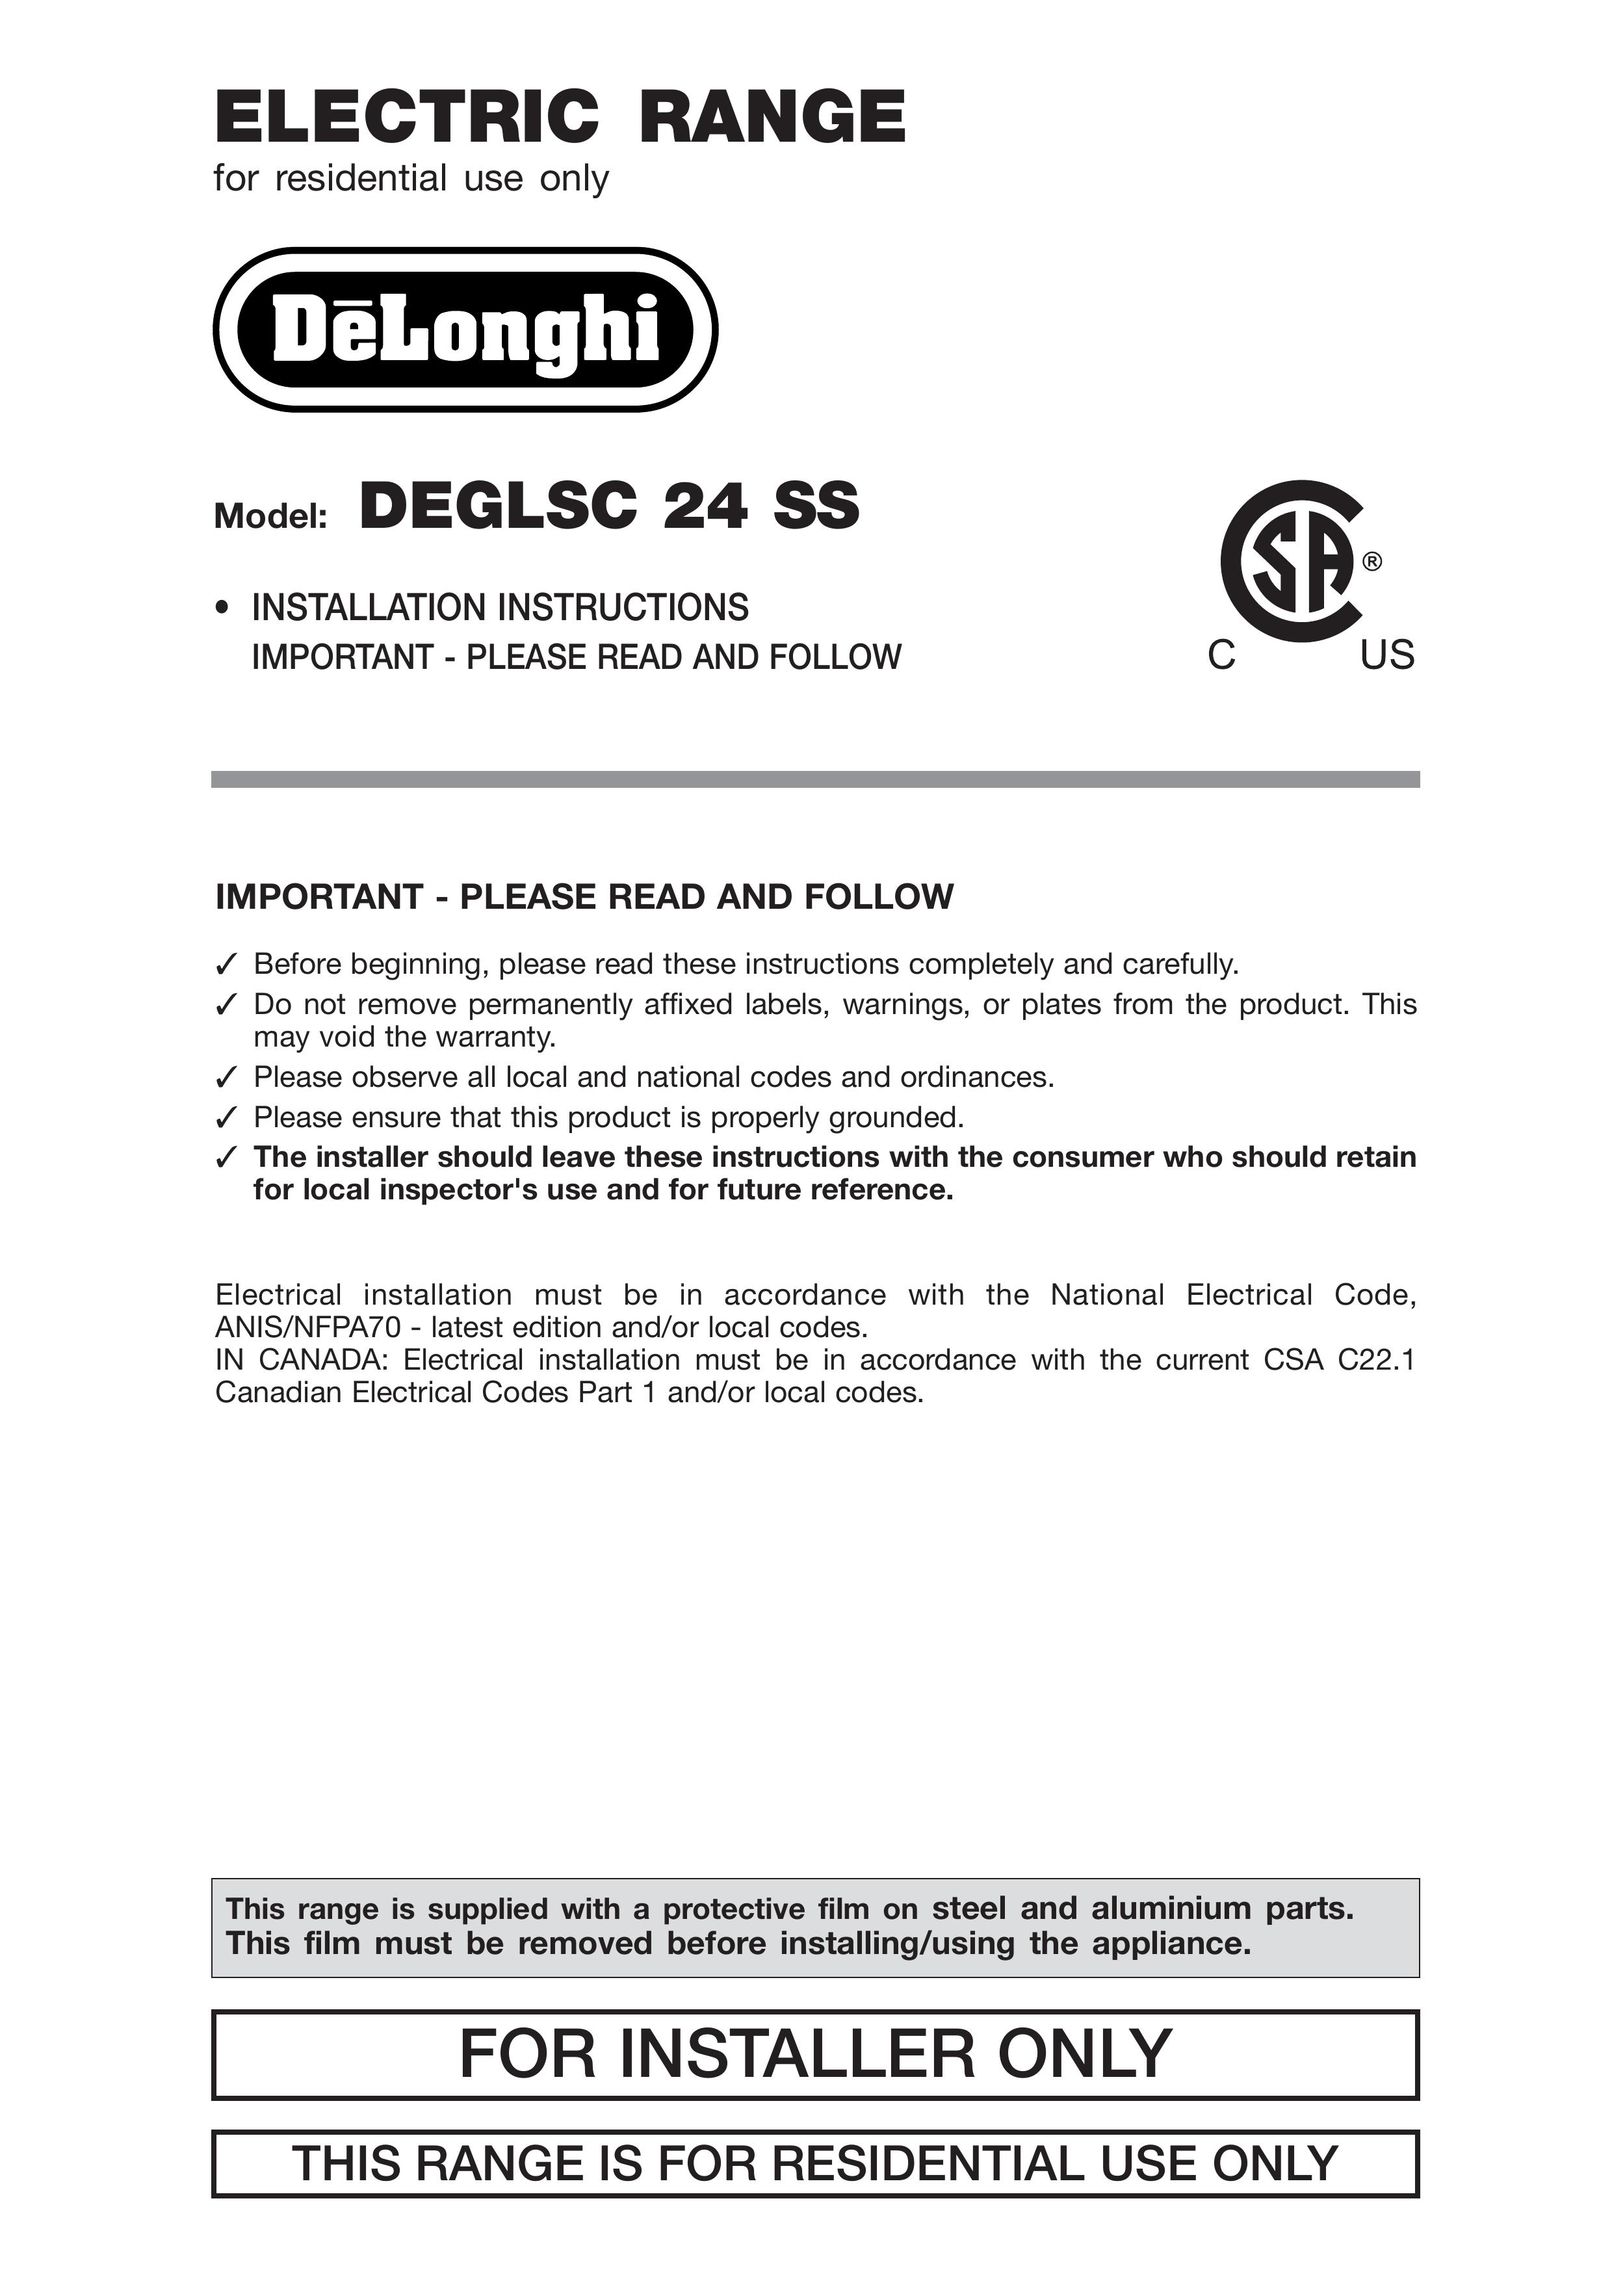 DeLonghi DEGLSC 24 SS Range User Manual